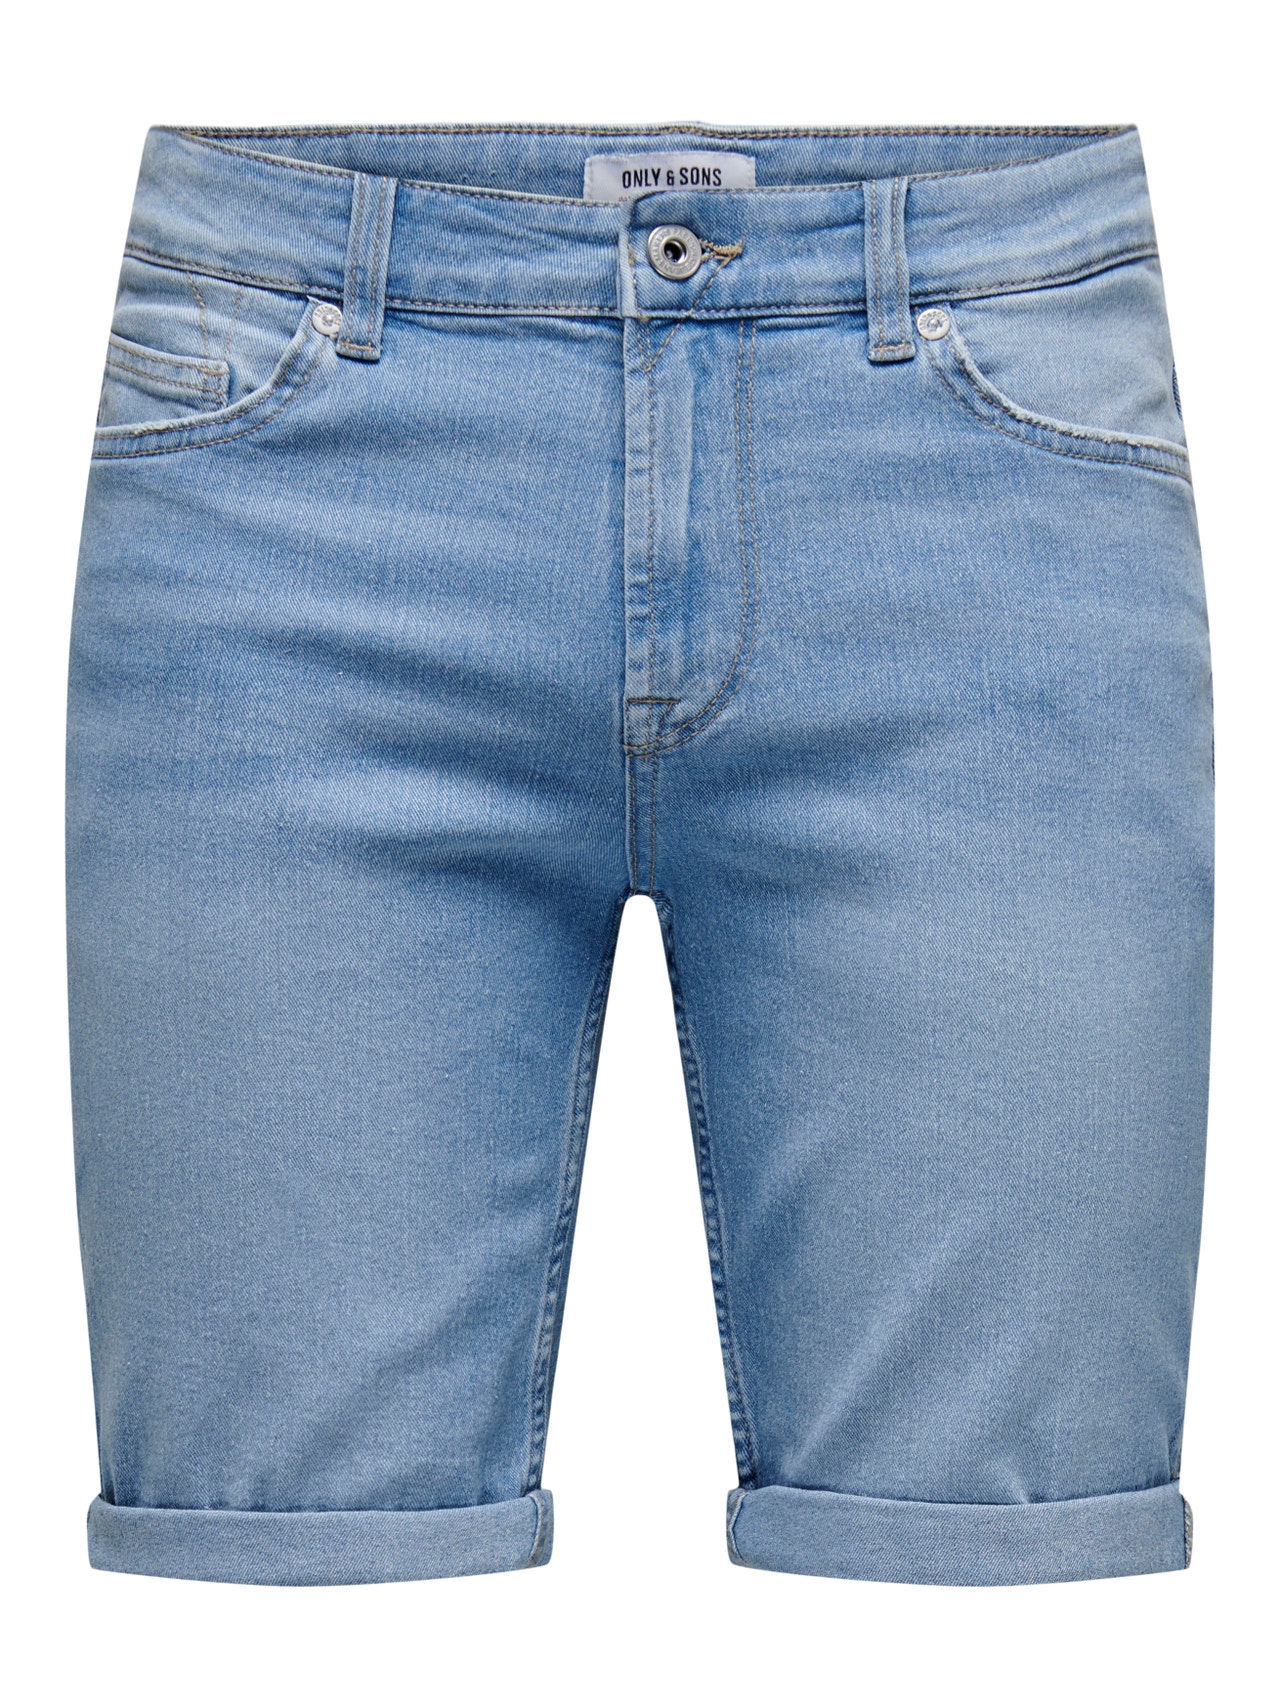 ONLY & SONS Shorts Regular Fit -Light Blue Denim - 22024330